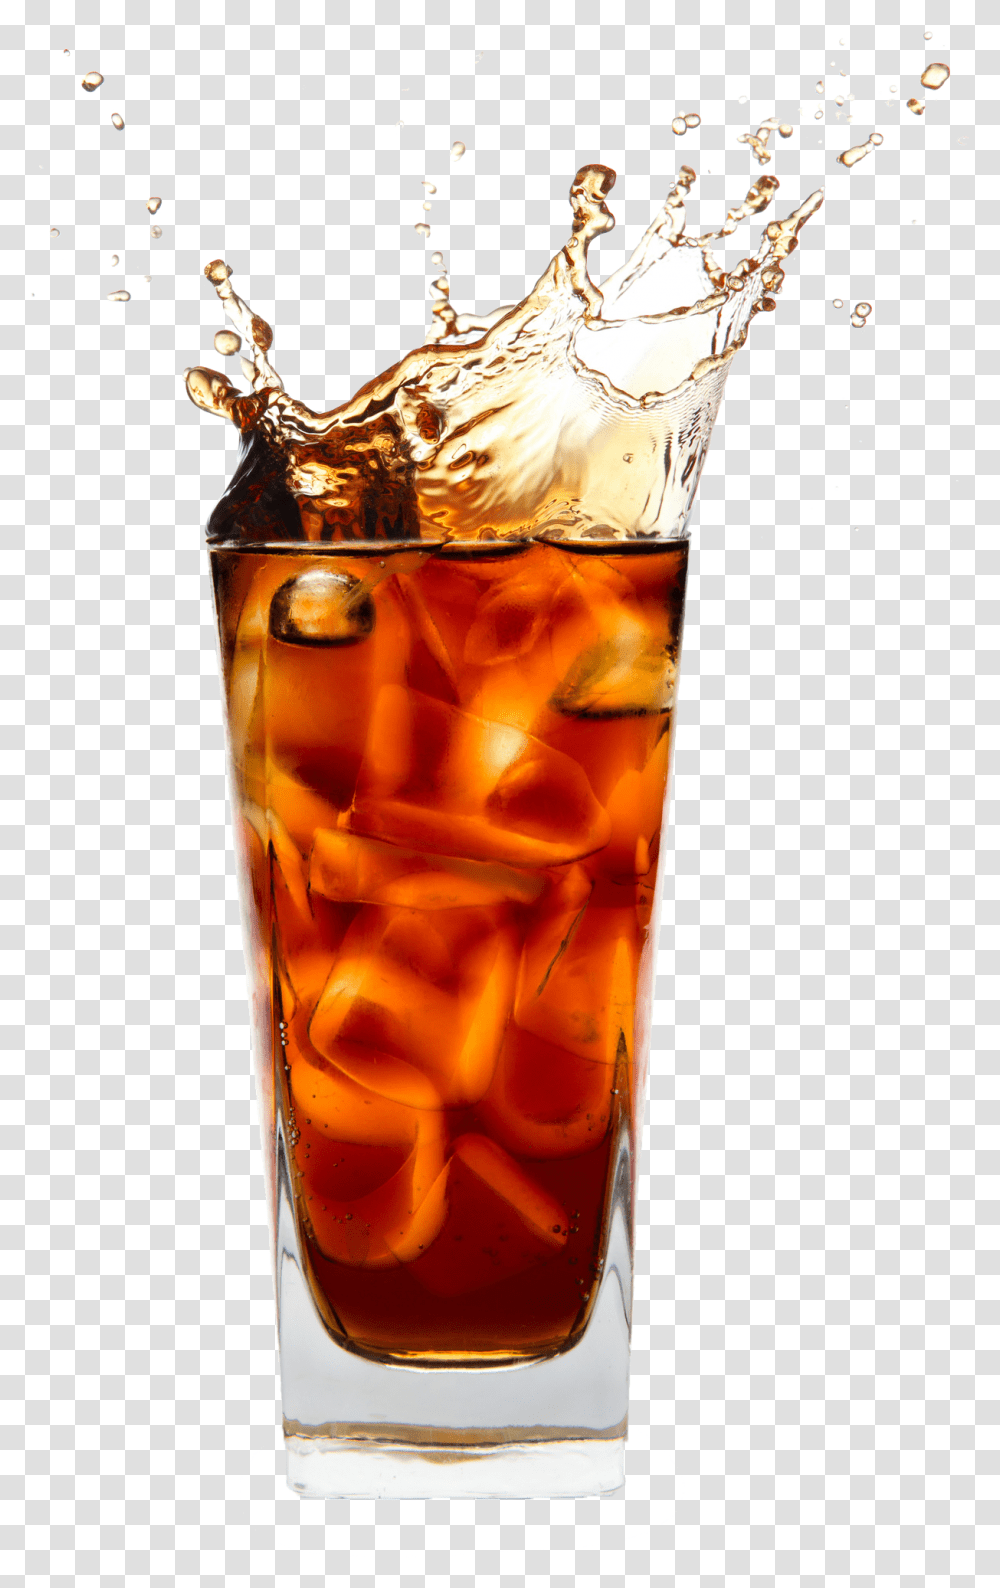 Coca Cola Images Background Play Iced Tea Splash, Glass, Beverage, Drink, Beer Glass Transparent Png